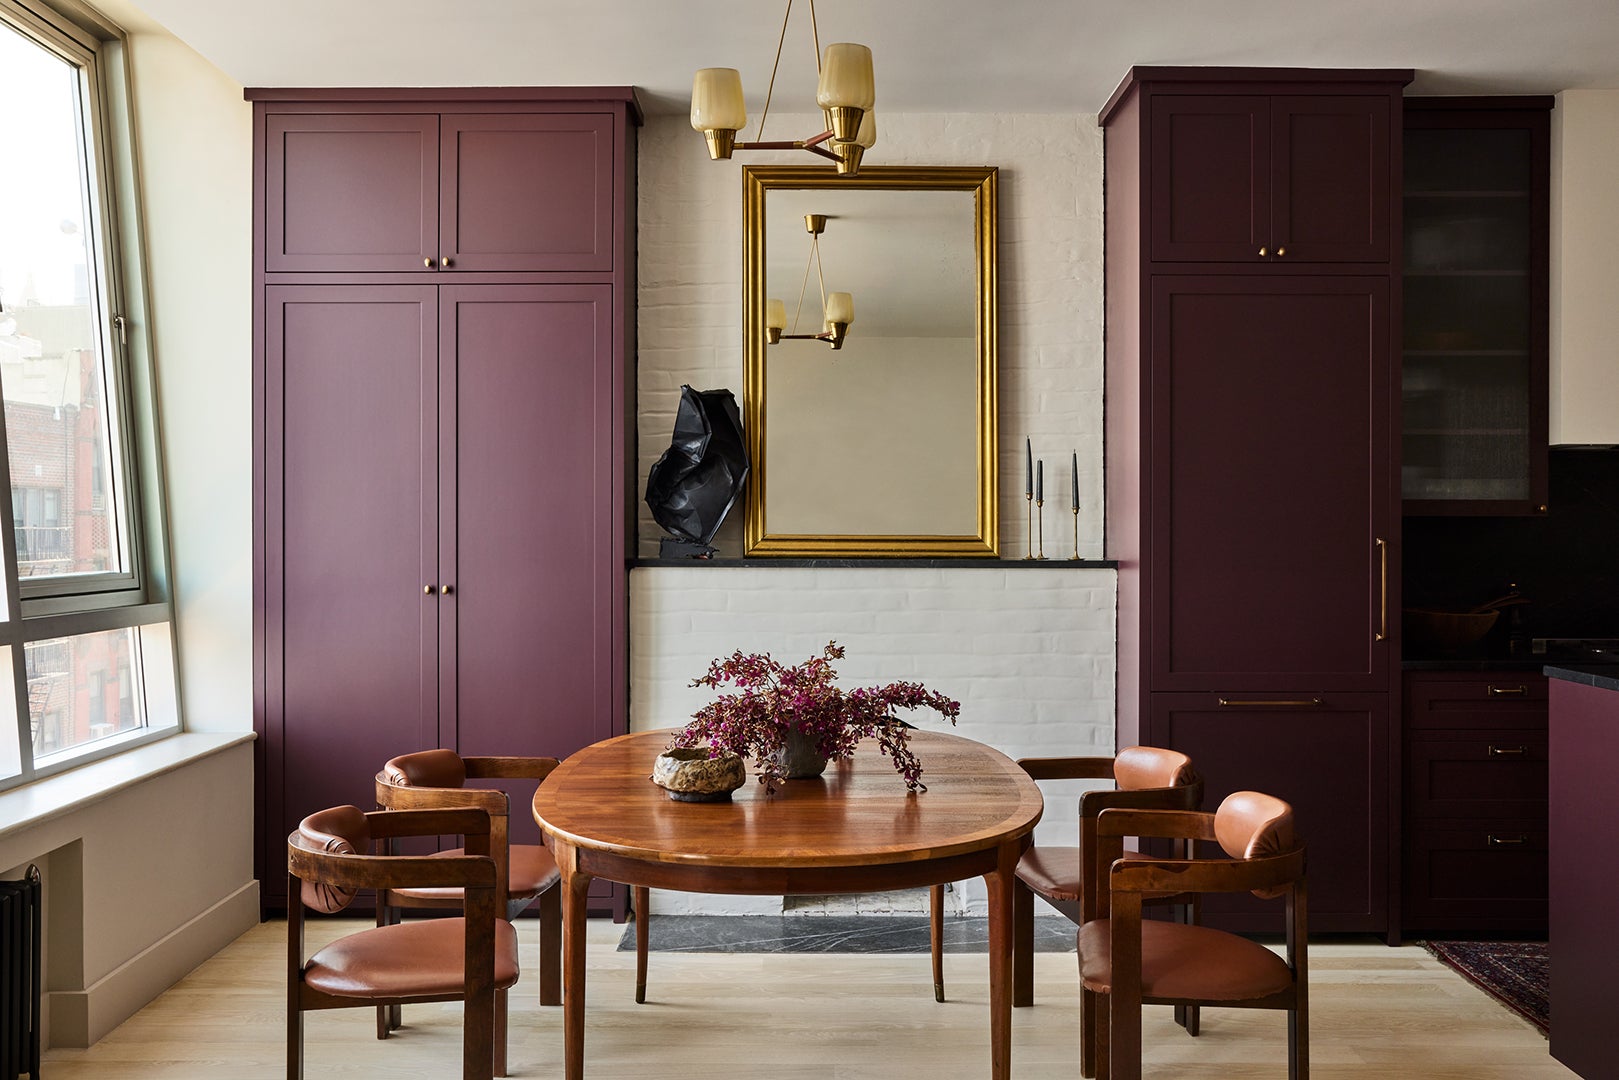 eggplant colored cabinets